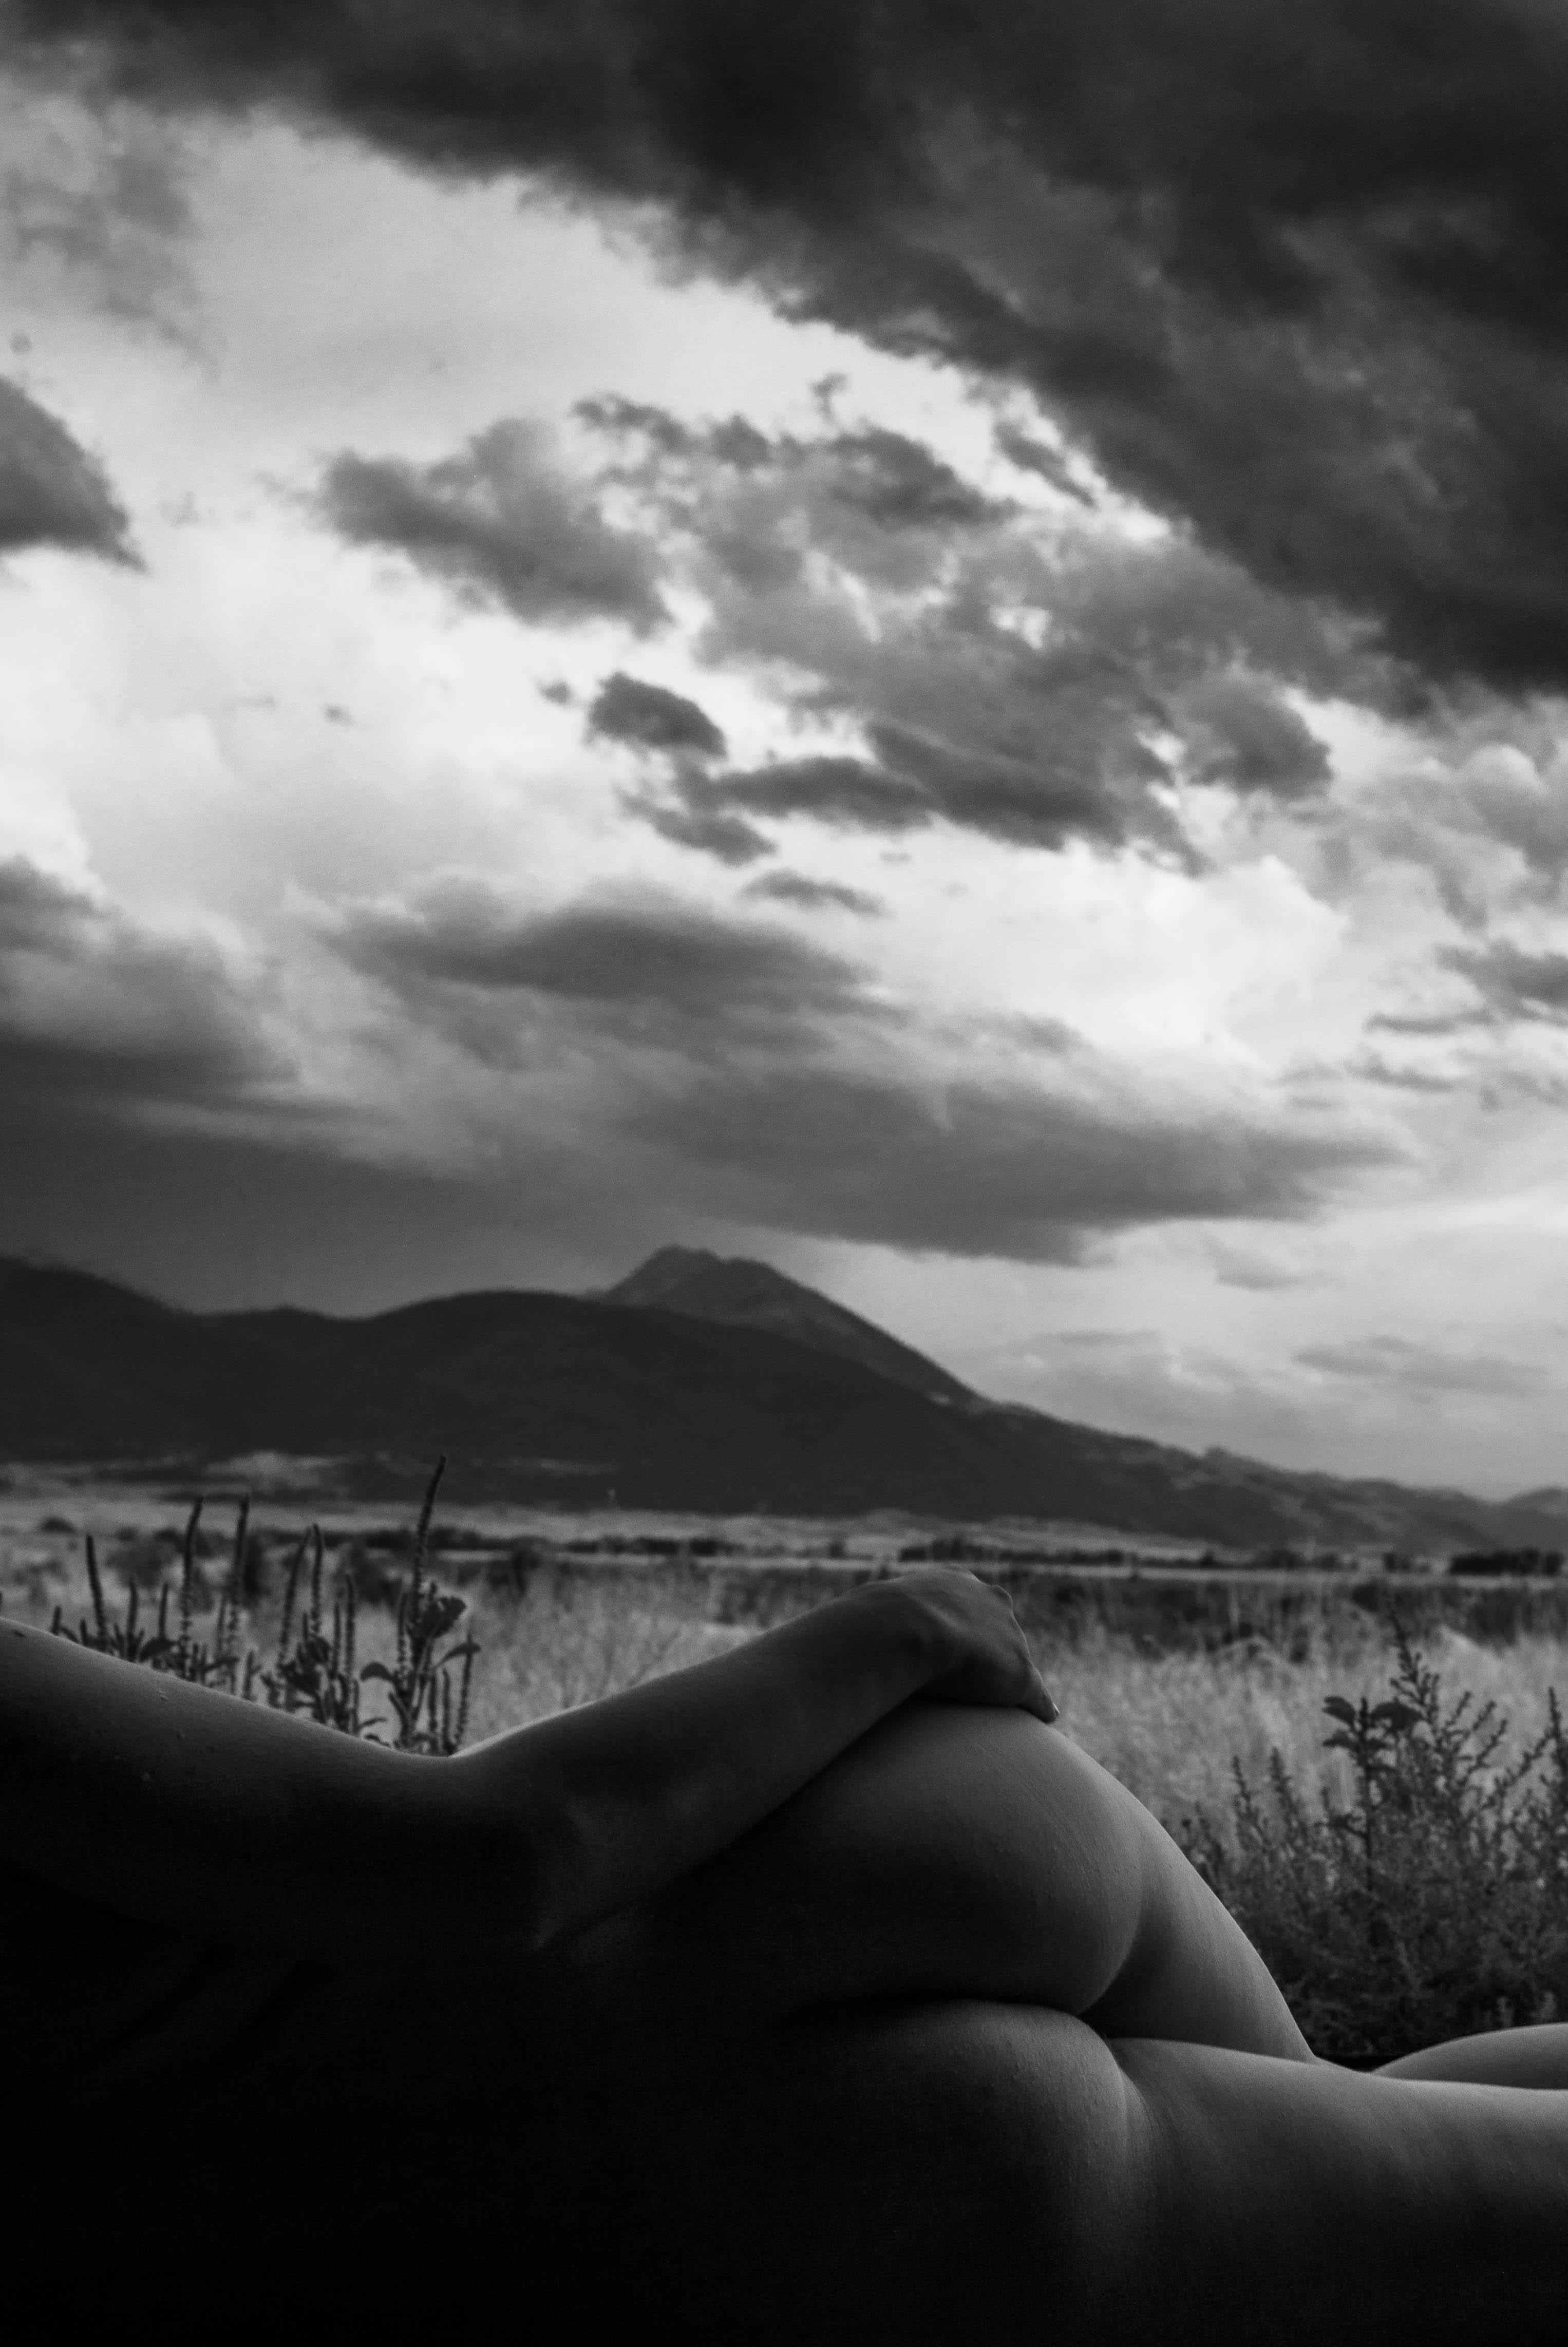 Kirill Polevoy Black and White Photograph - Nude Mountain - Black & White Photo, Nude Female Torso in Montana Mountain Scene